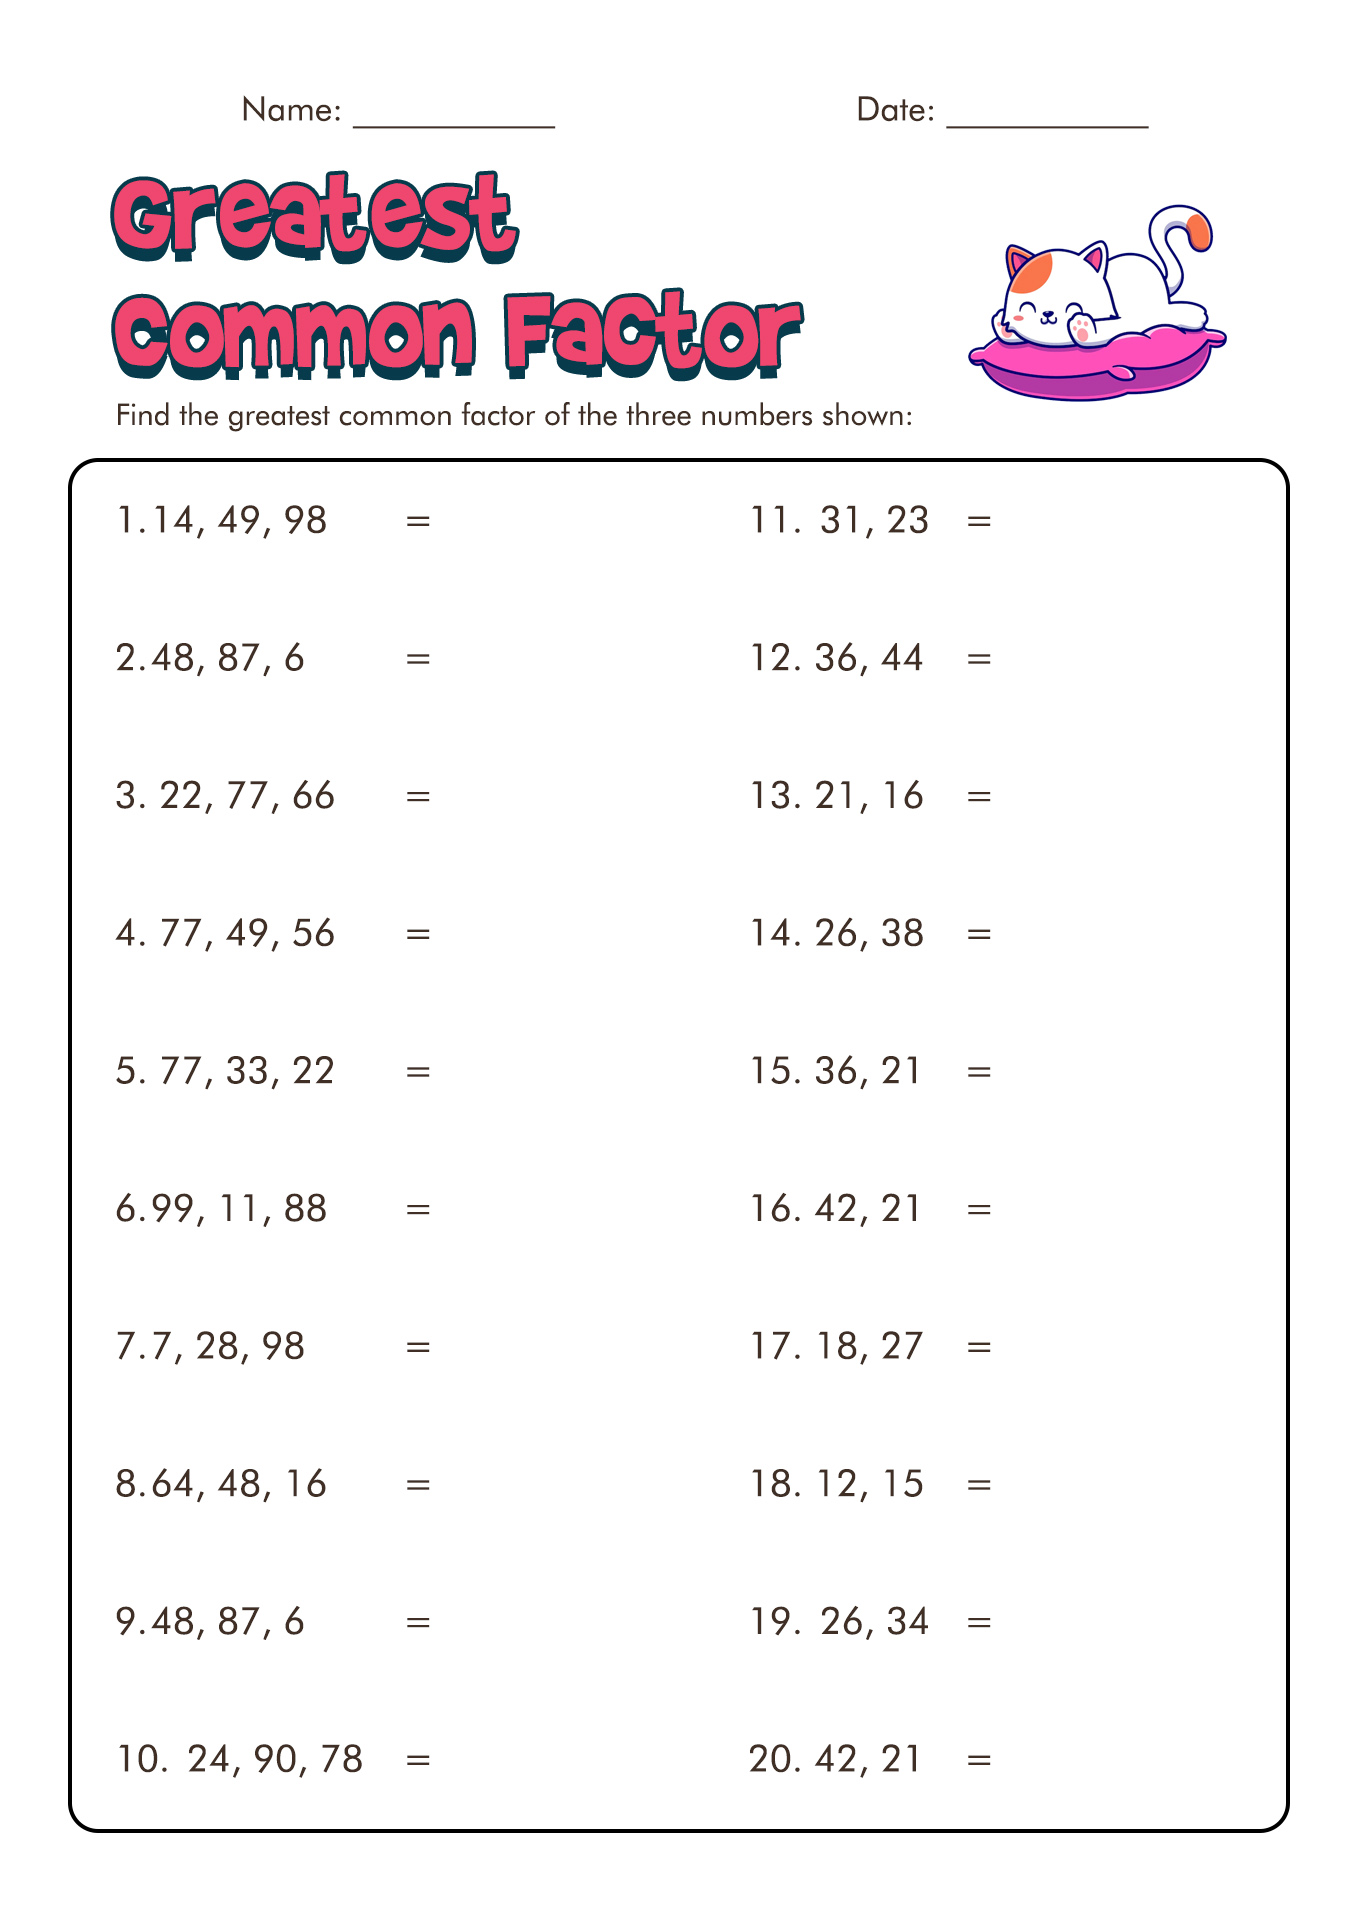 Factoring Greatest Common Factor Worksheet Image